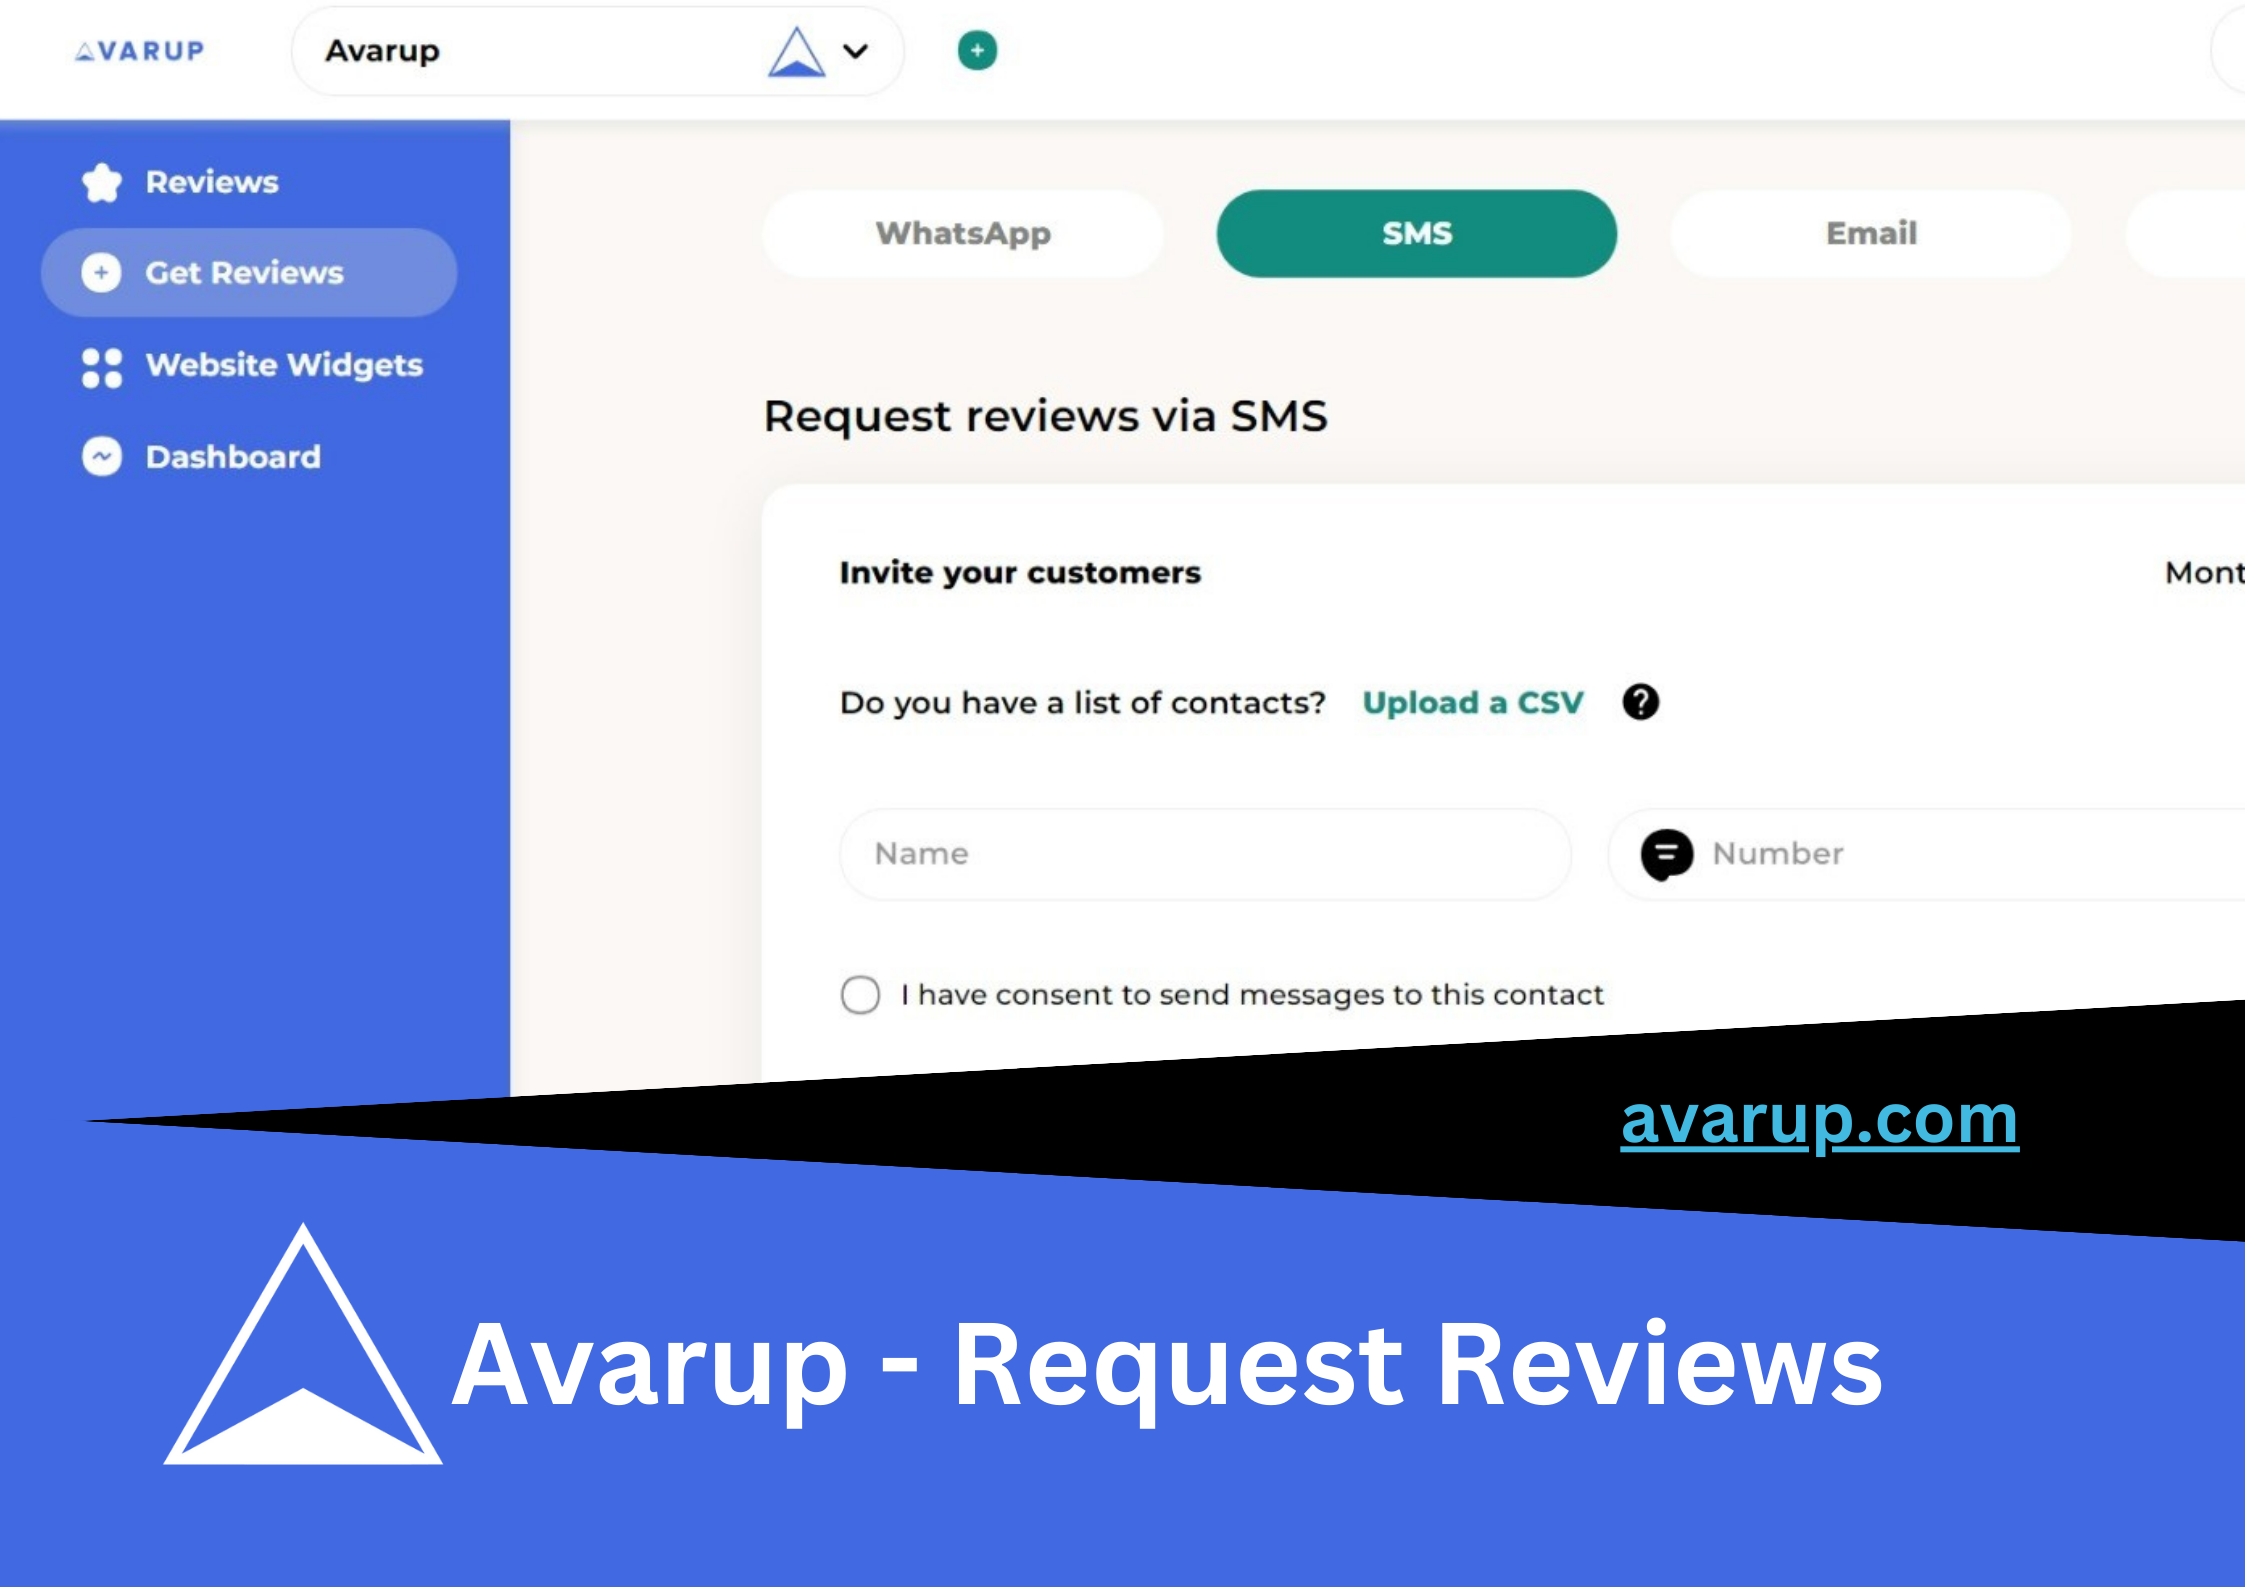 Avarup - Request Reviews